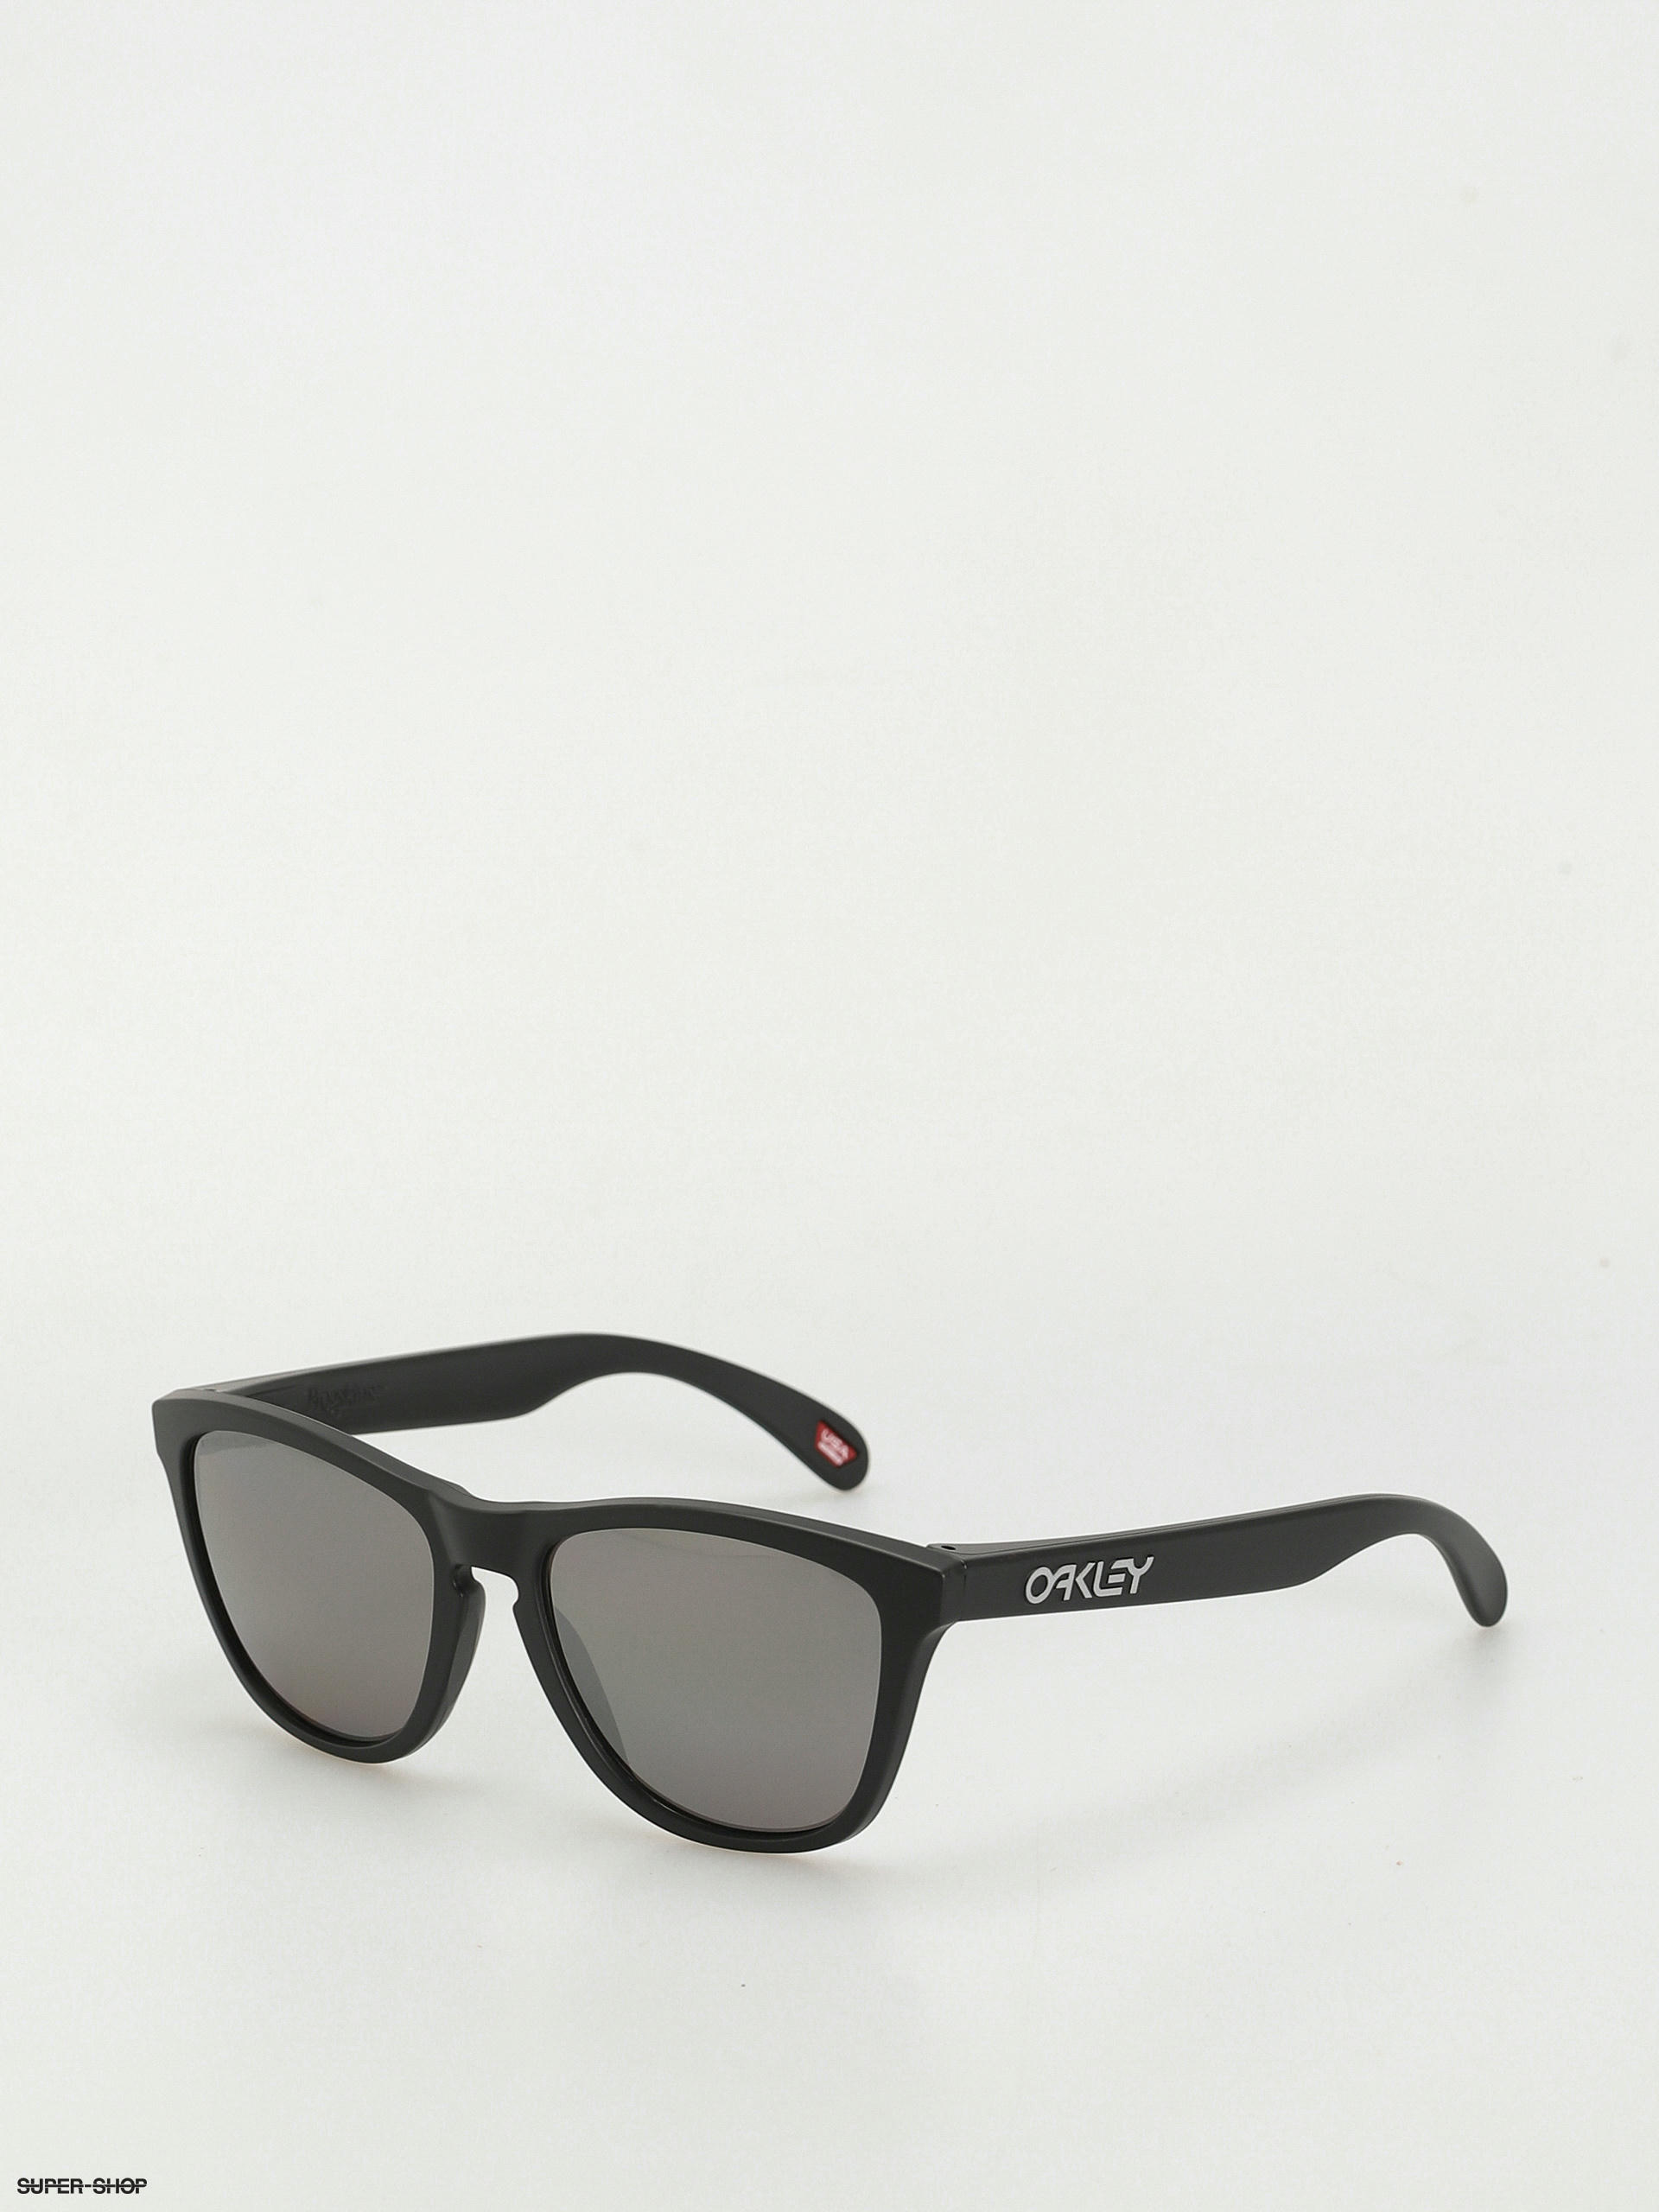 Oakley Sunglasses Frogskins (matte black/prizm black polarized)